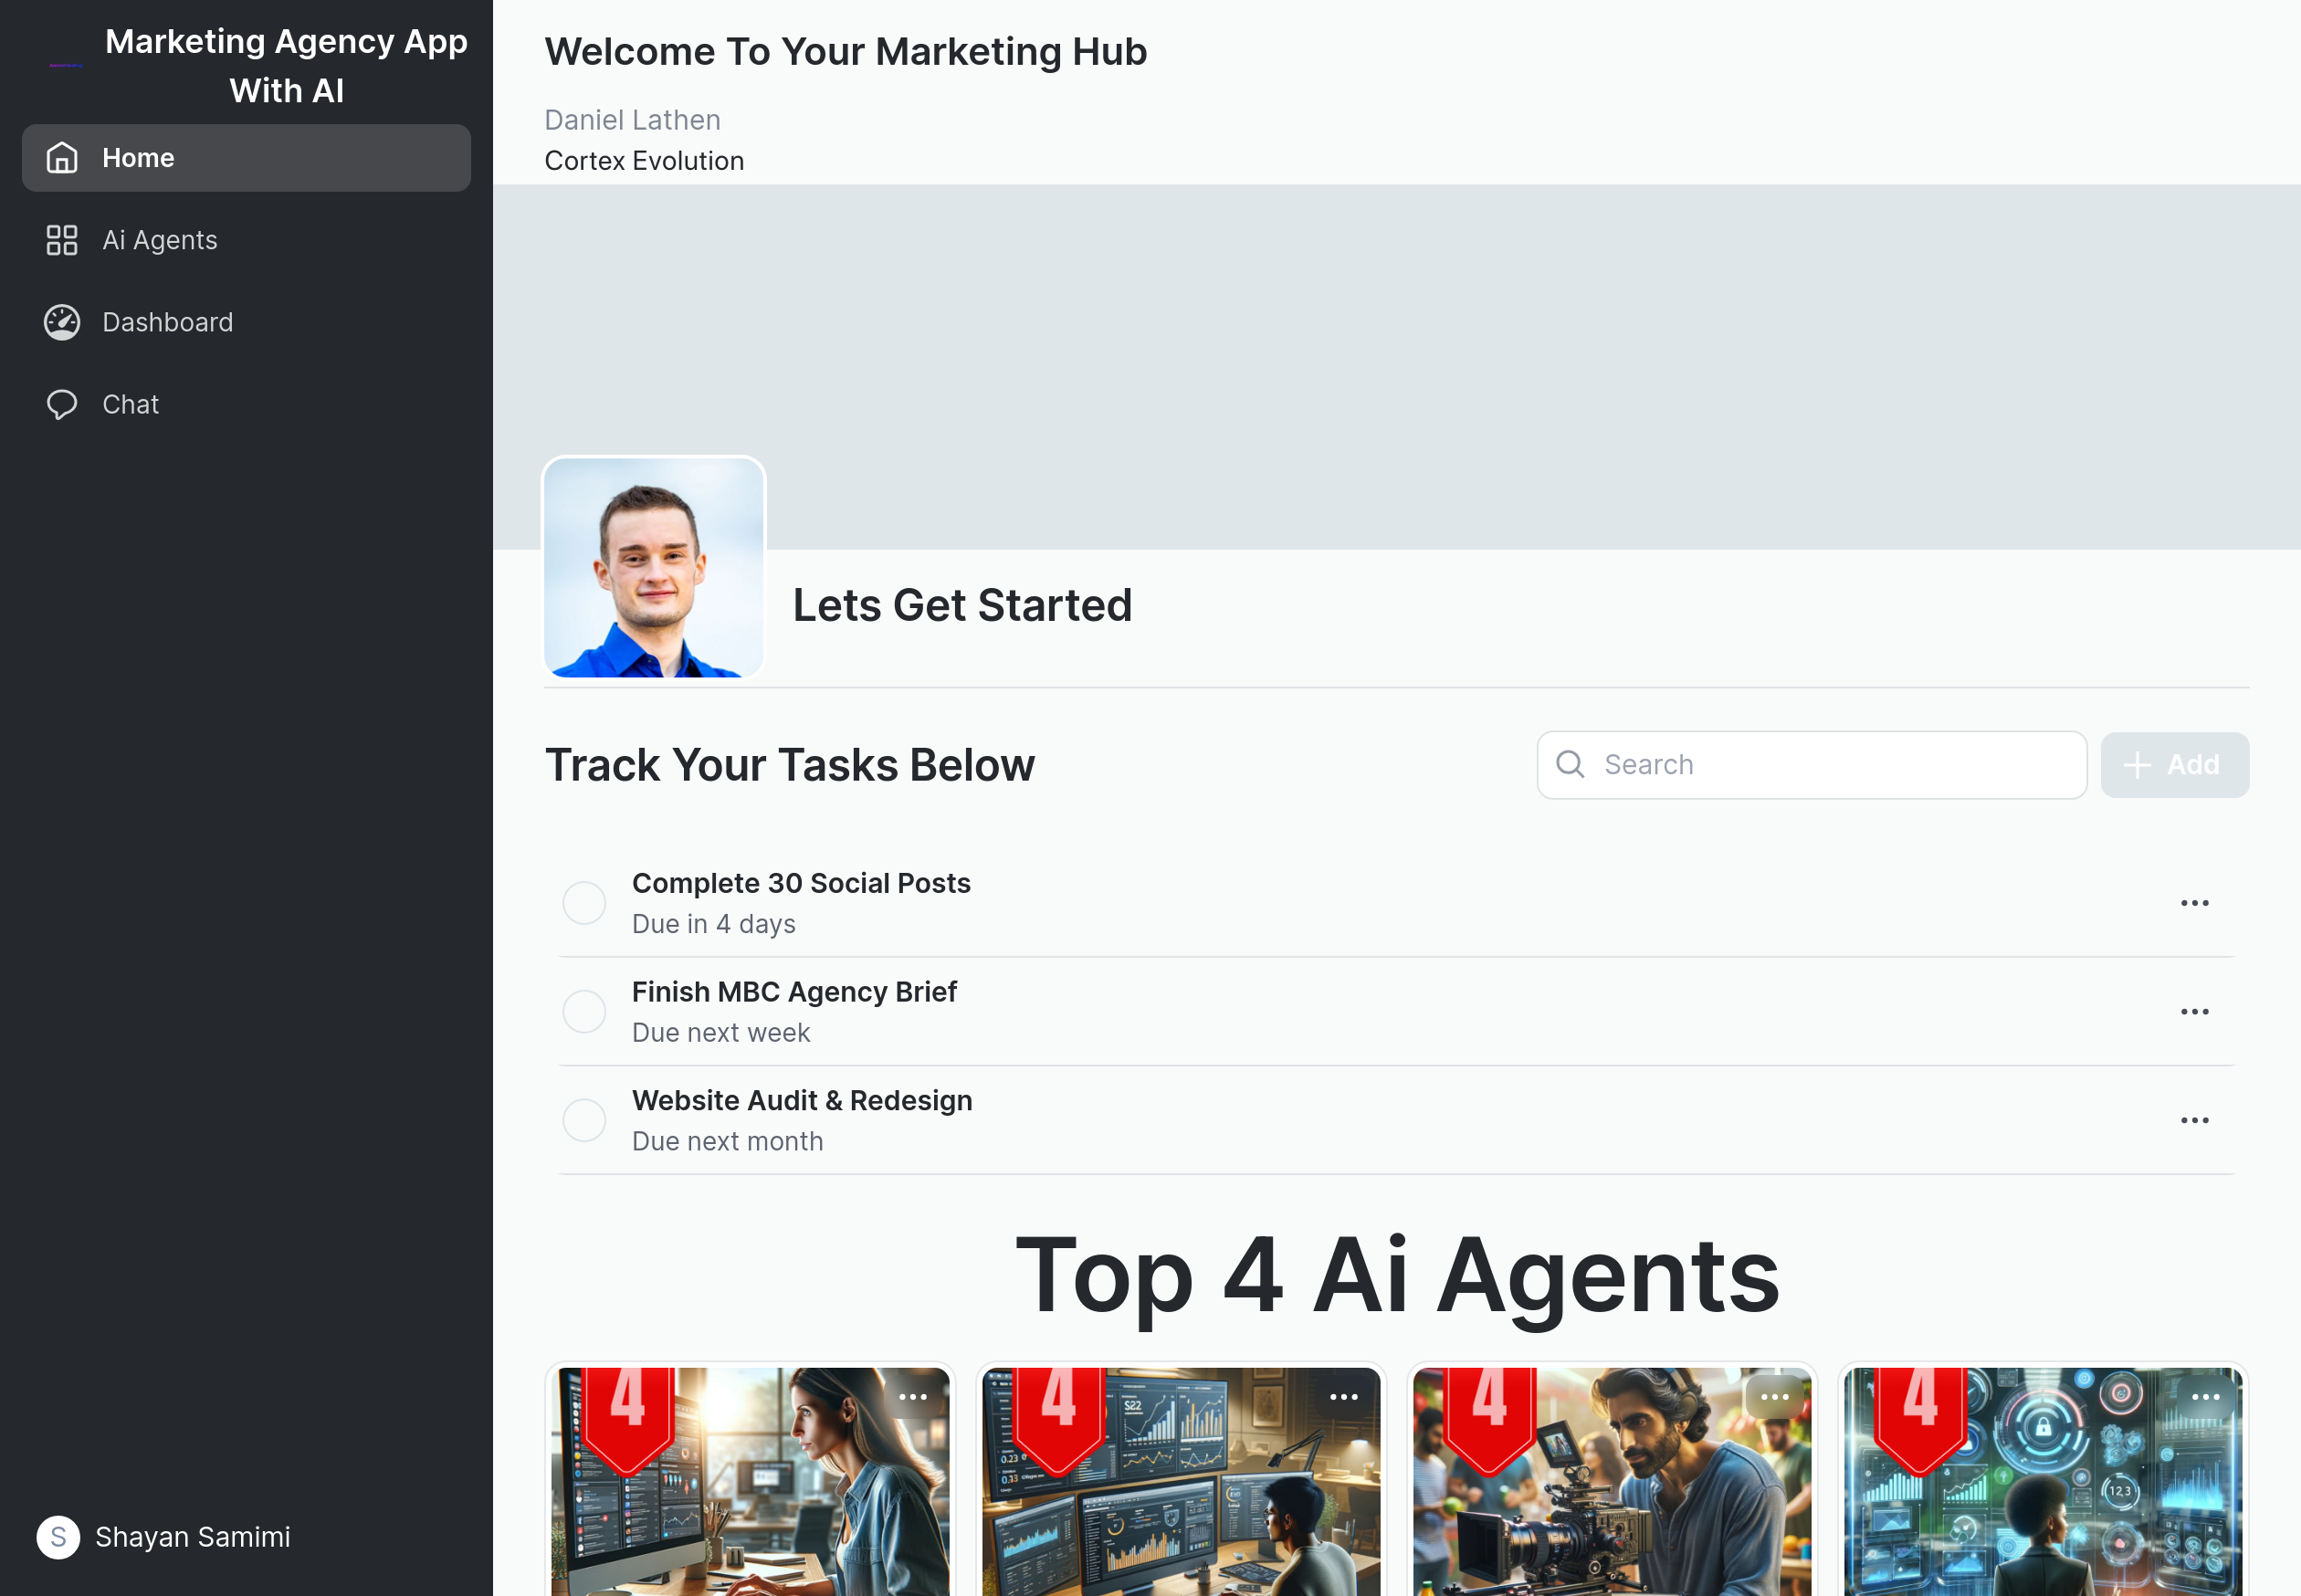 Marketing Agency App With AI